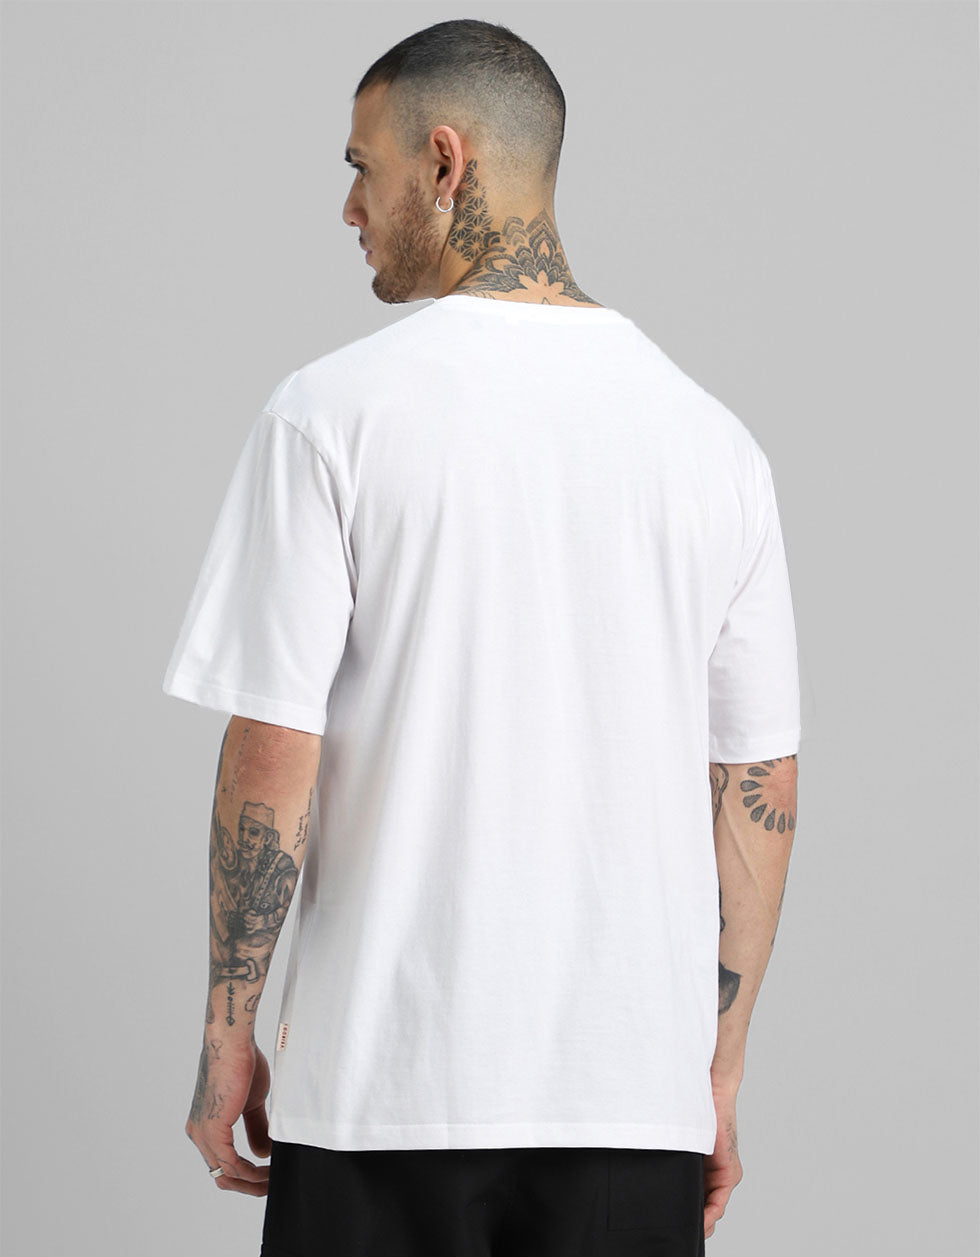 VEIRDO Printed White Men's Front Typographic Printed Tshirt